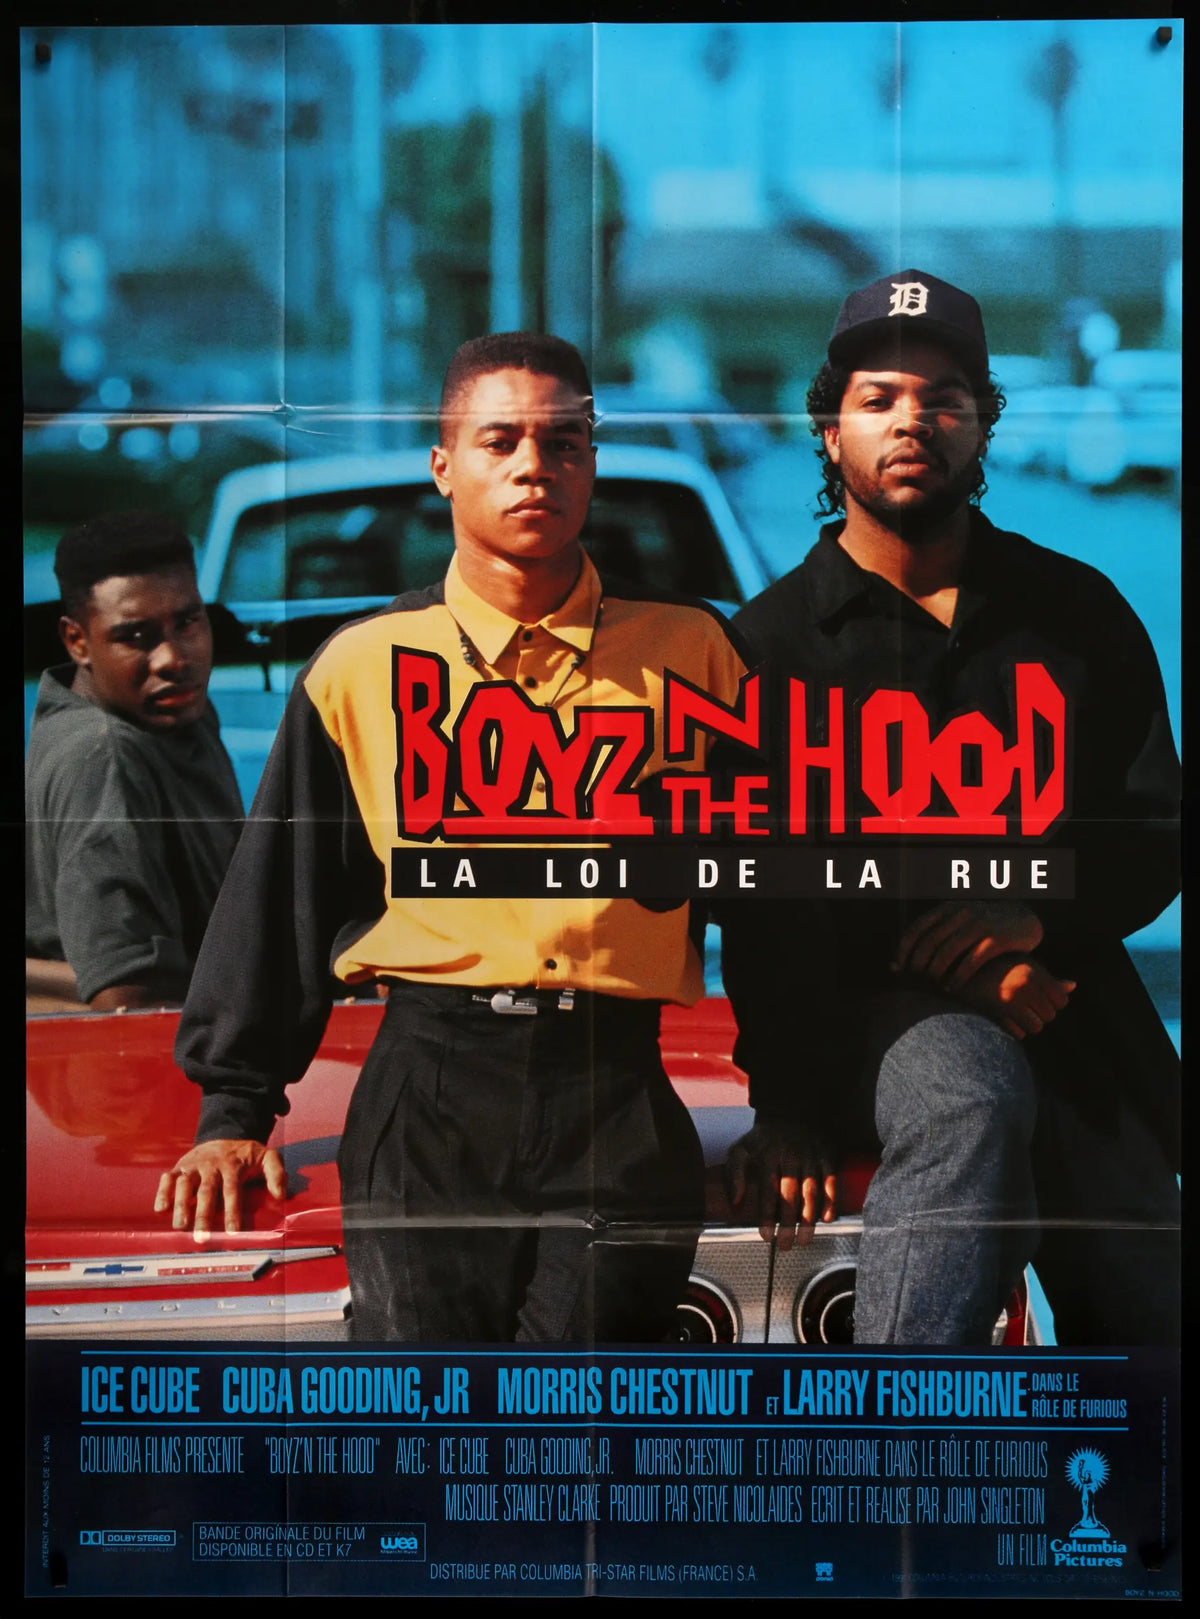 Boyz N the Hood (1991) original movie poster for sale at Original Film Art